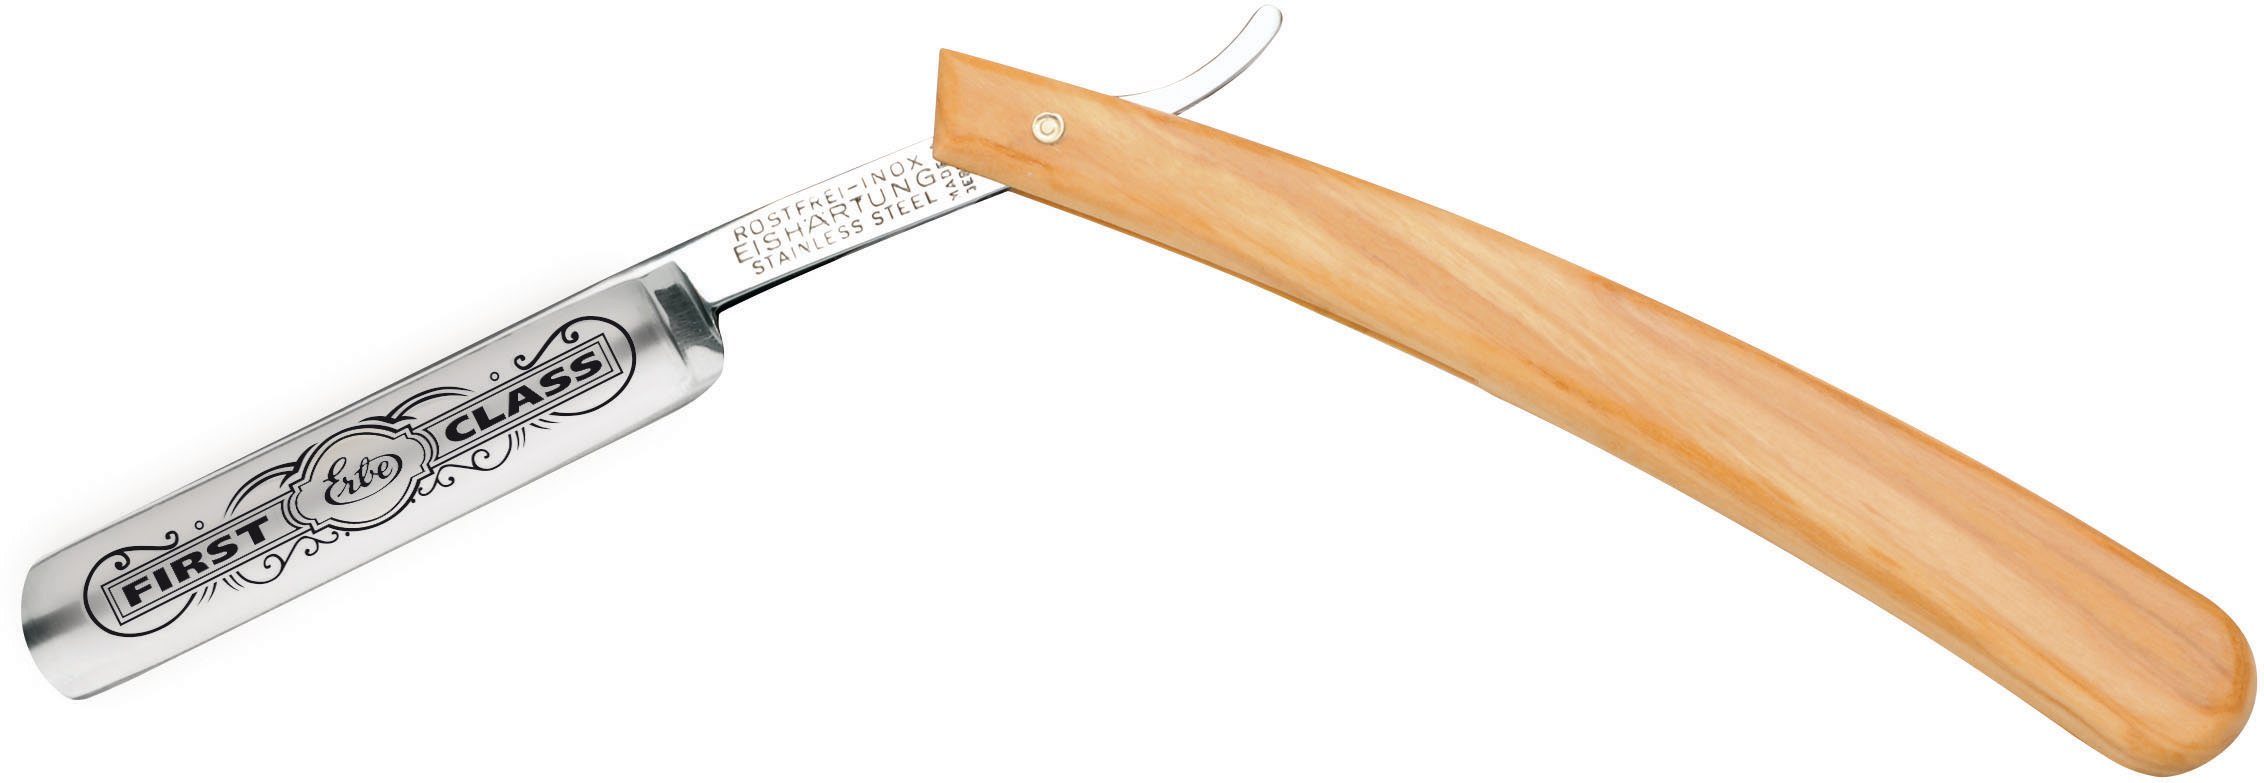 ERBE Rasiermesser Qualitäts-Rasiermesser mit Olivenholz-Griff | Rasiermesser